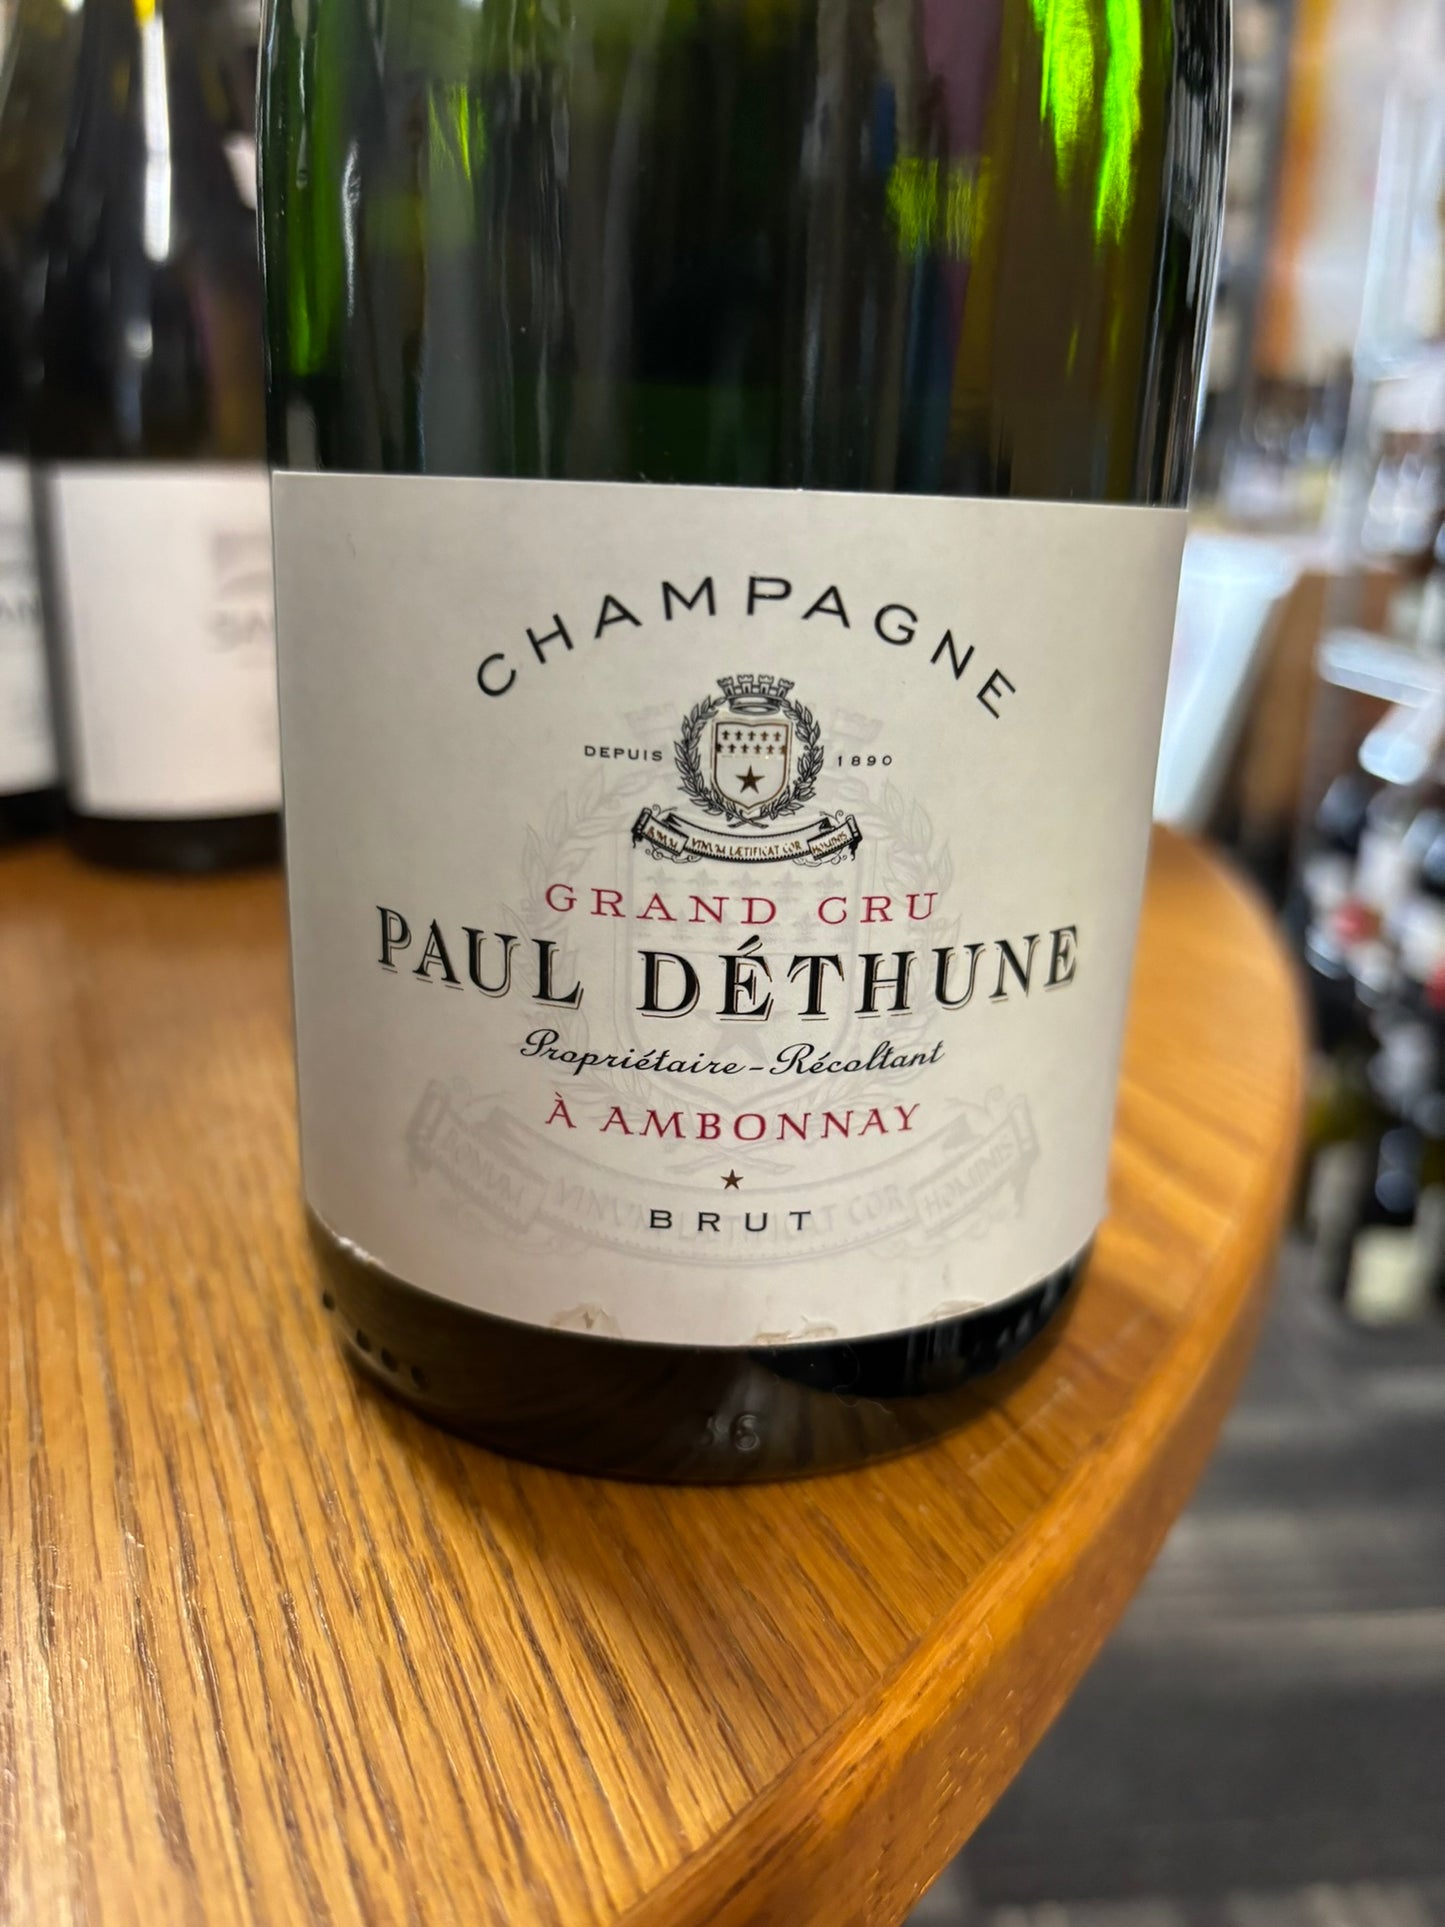 PAUL DETHUNE NV Champagne Grand Cru Brut (Ambonnay, France)